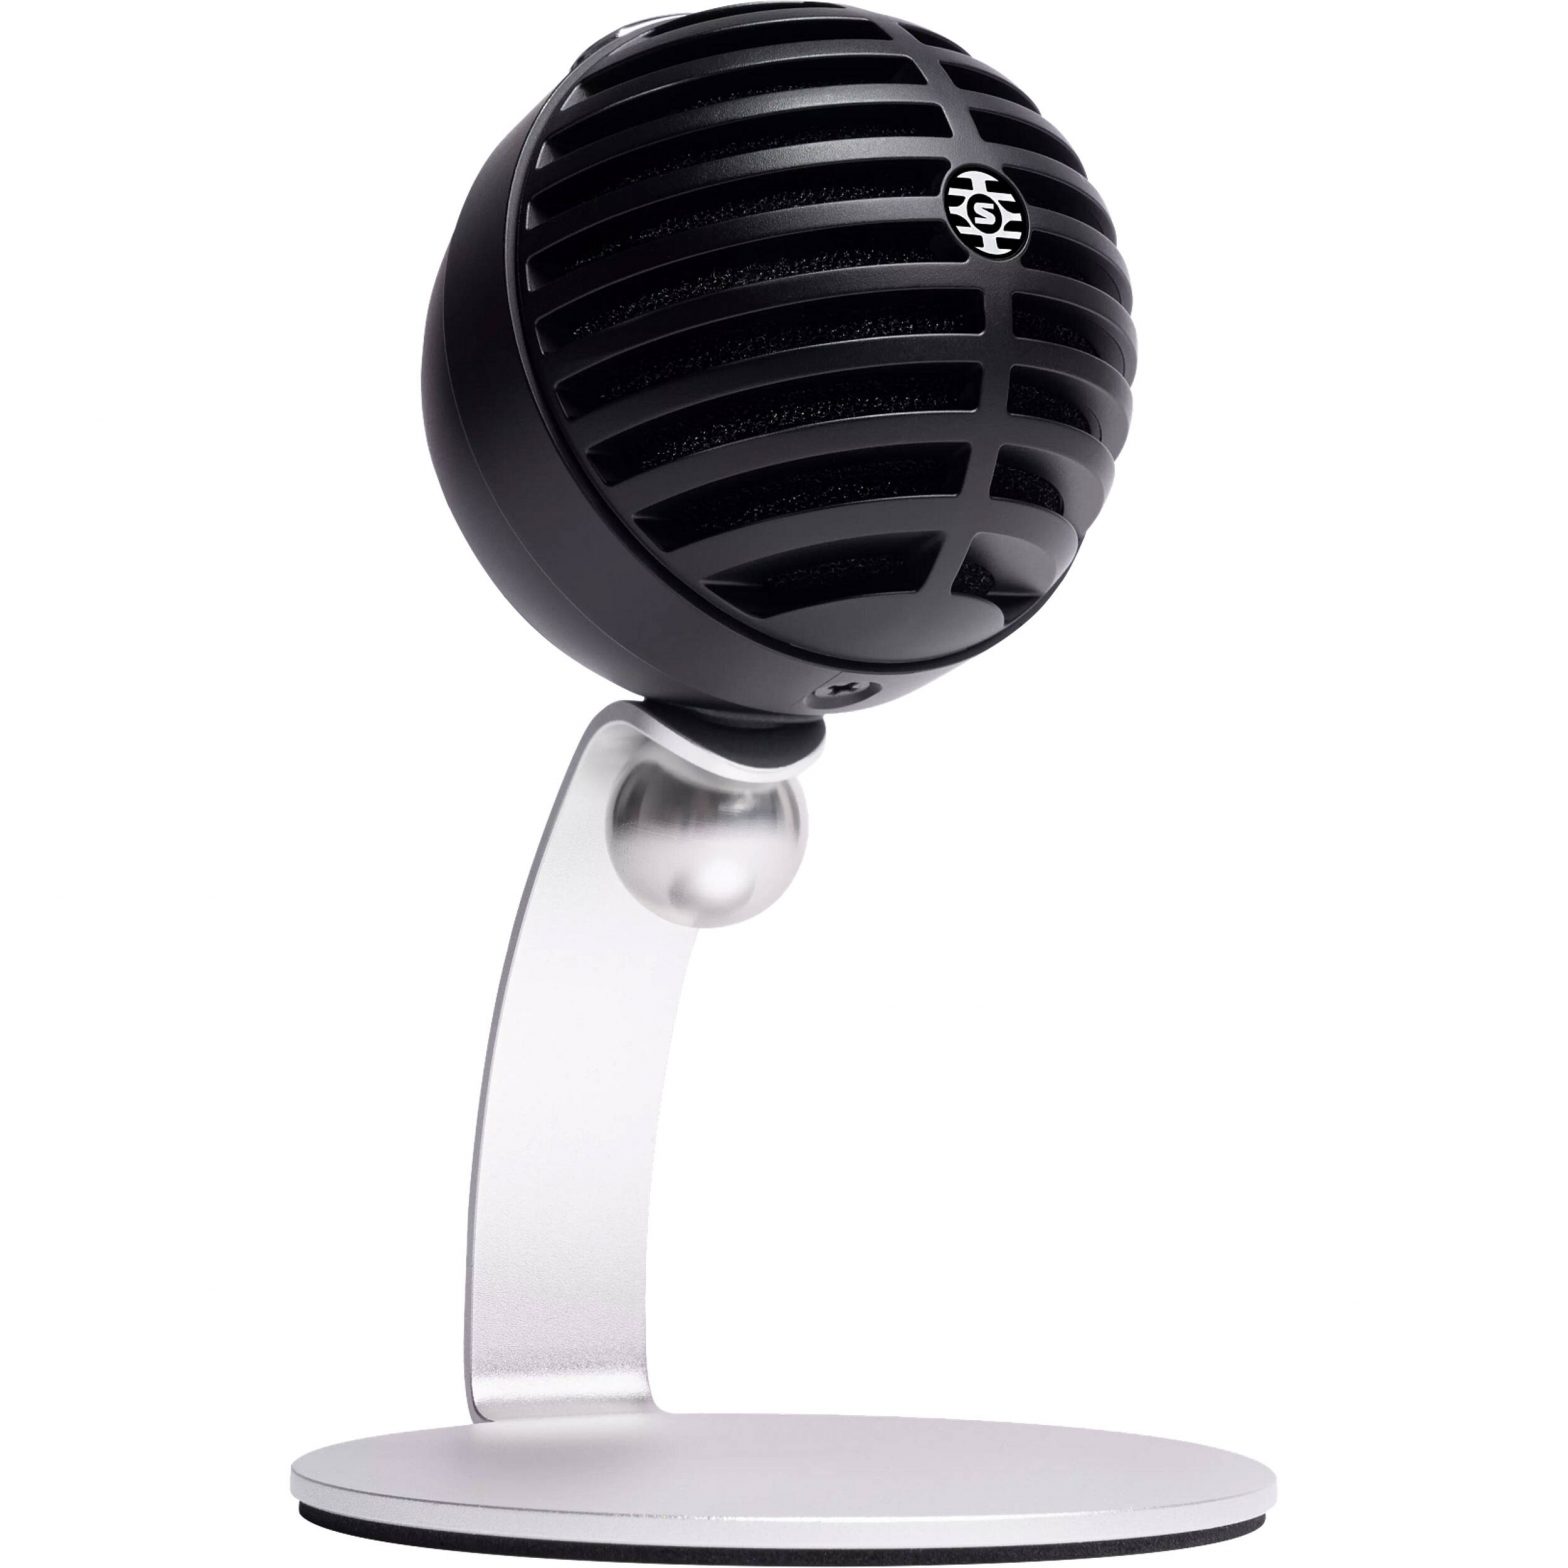 Shure MV5C Home Office Microphone User Manual